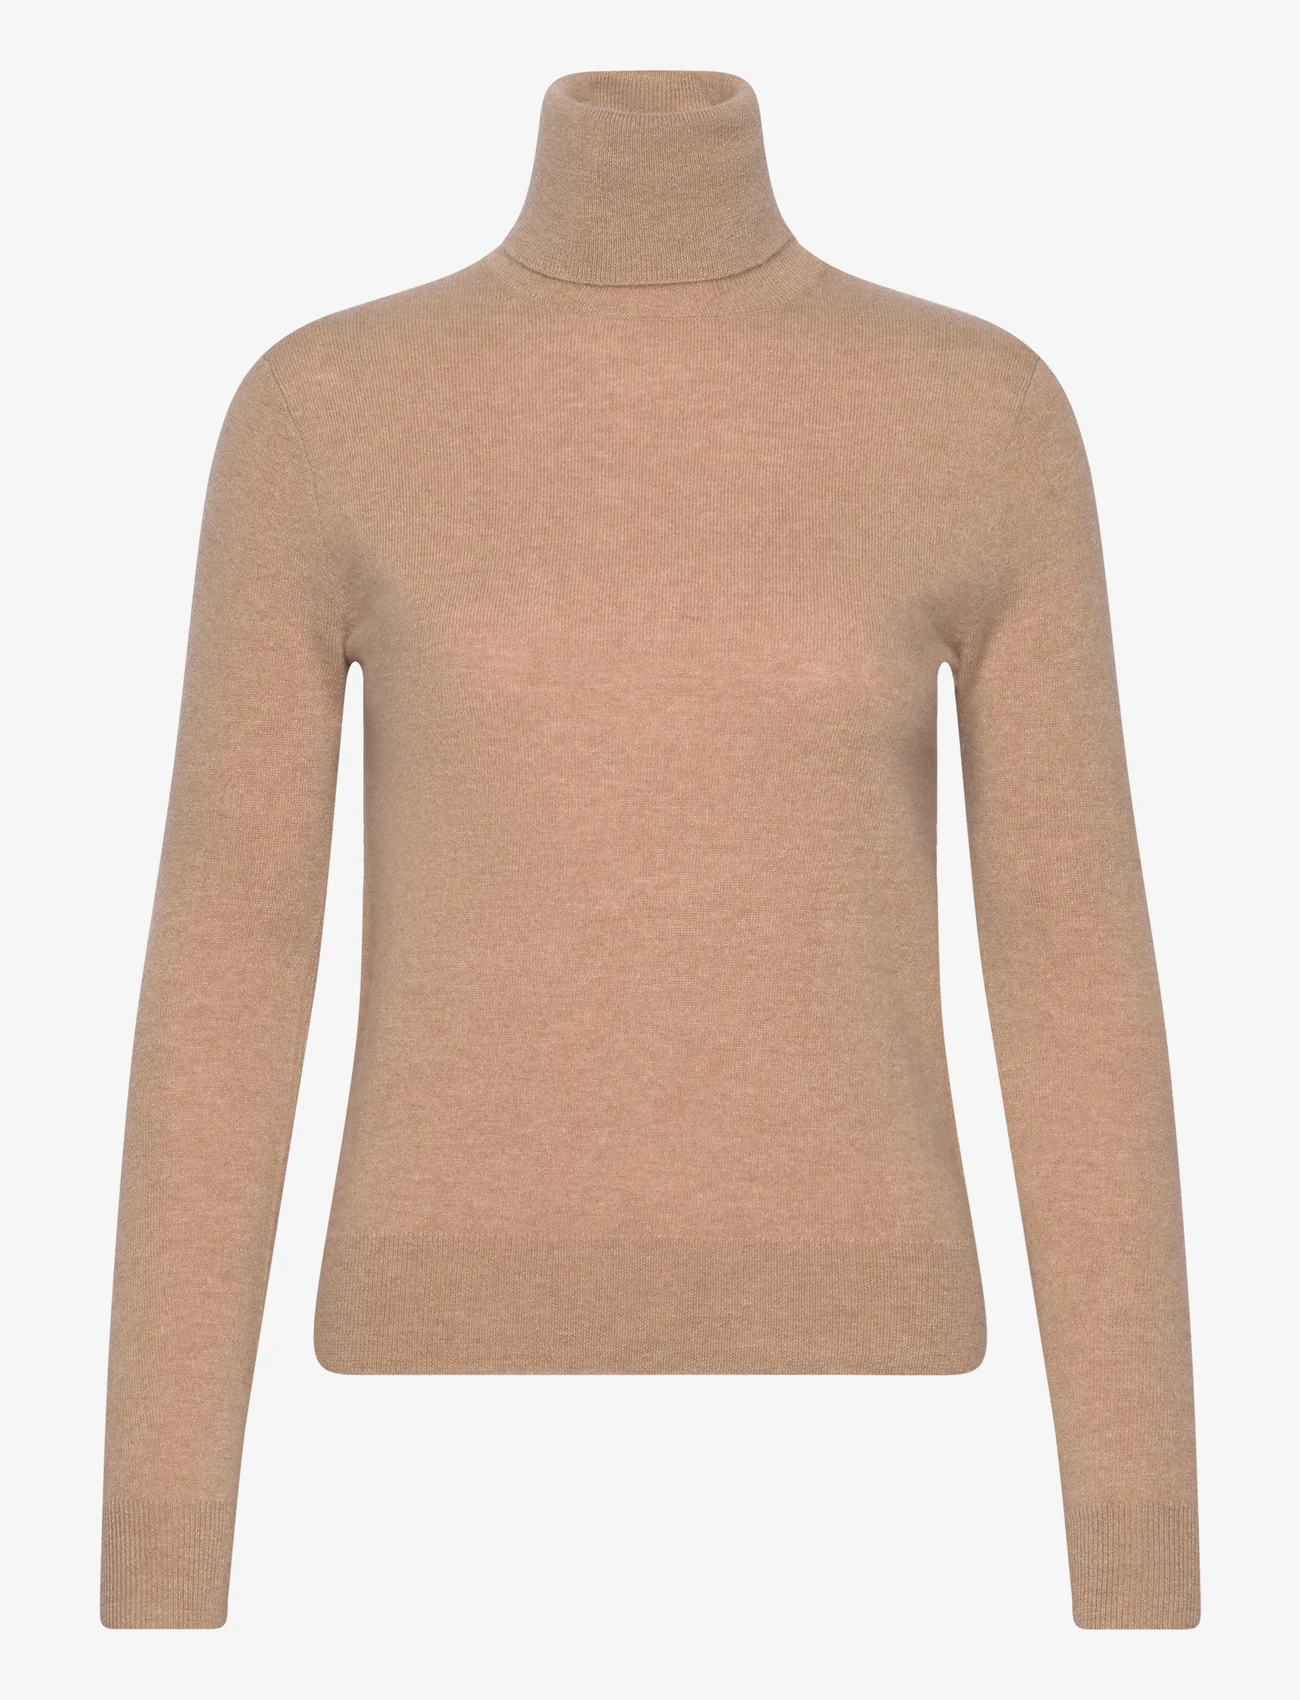 Polo Ralph Lauren - Slim Fit Cashmere Turtleneck - megztiniai su aukšta apykakle - collection camel - 0